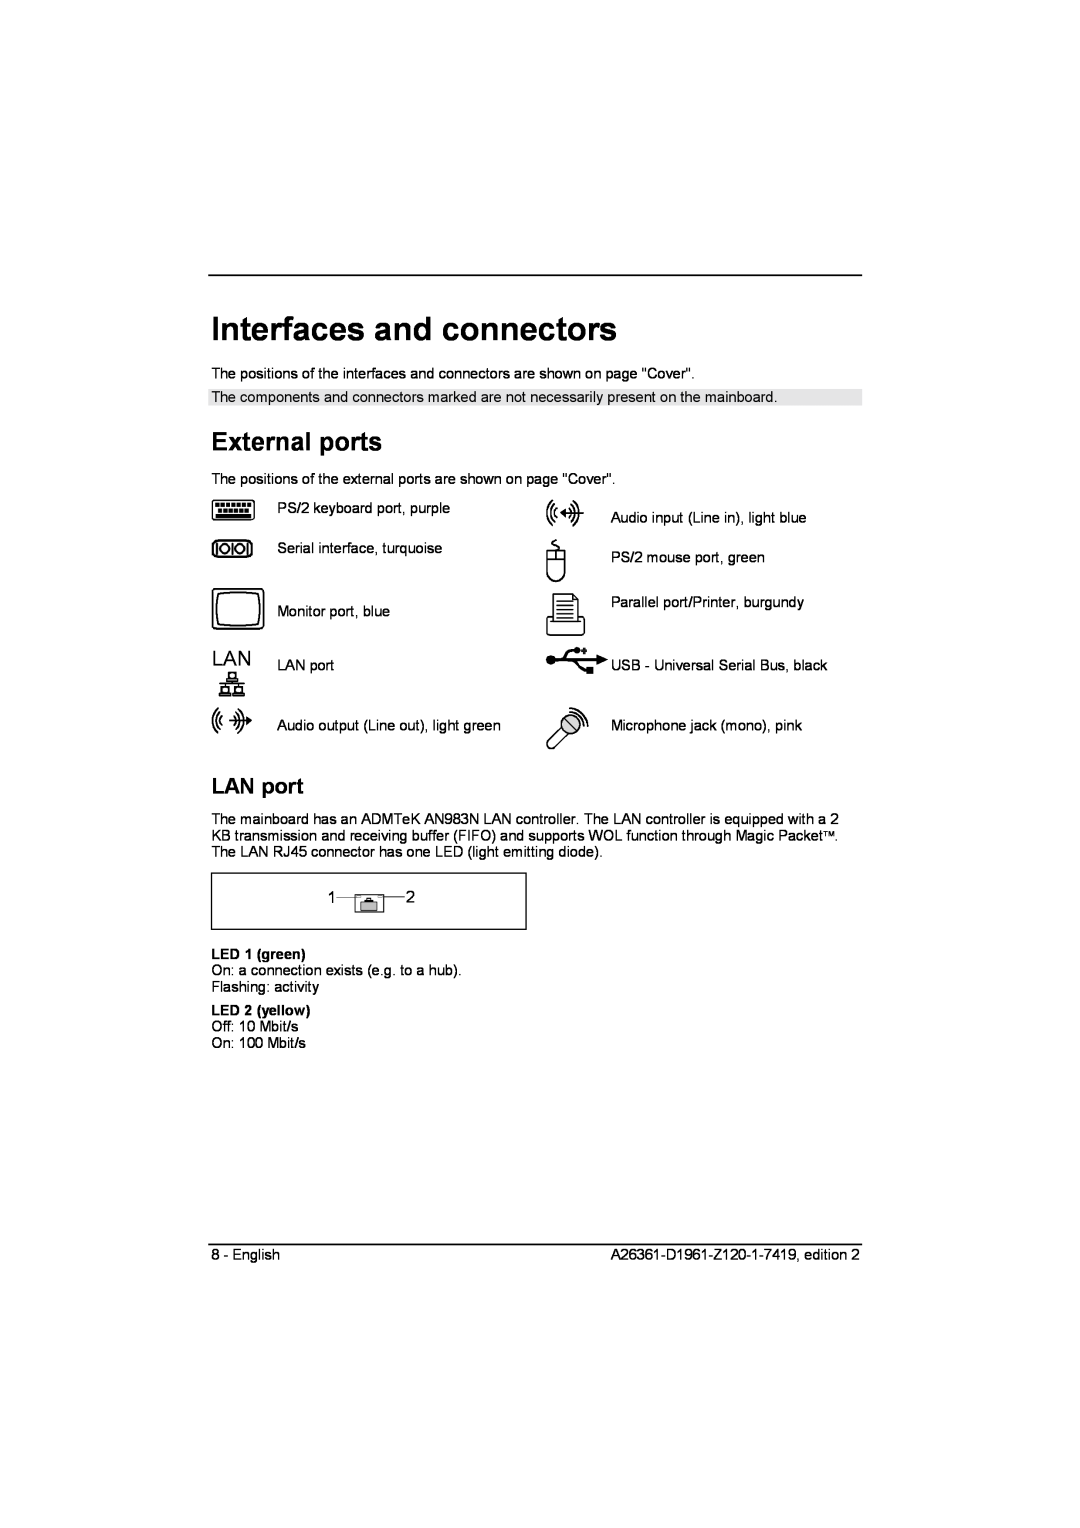 Fujitsu D1961 technical manual Interfaces and connectors, External ports, LAN port, LED 1 green, LED 2 yellow 